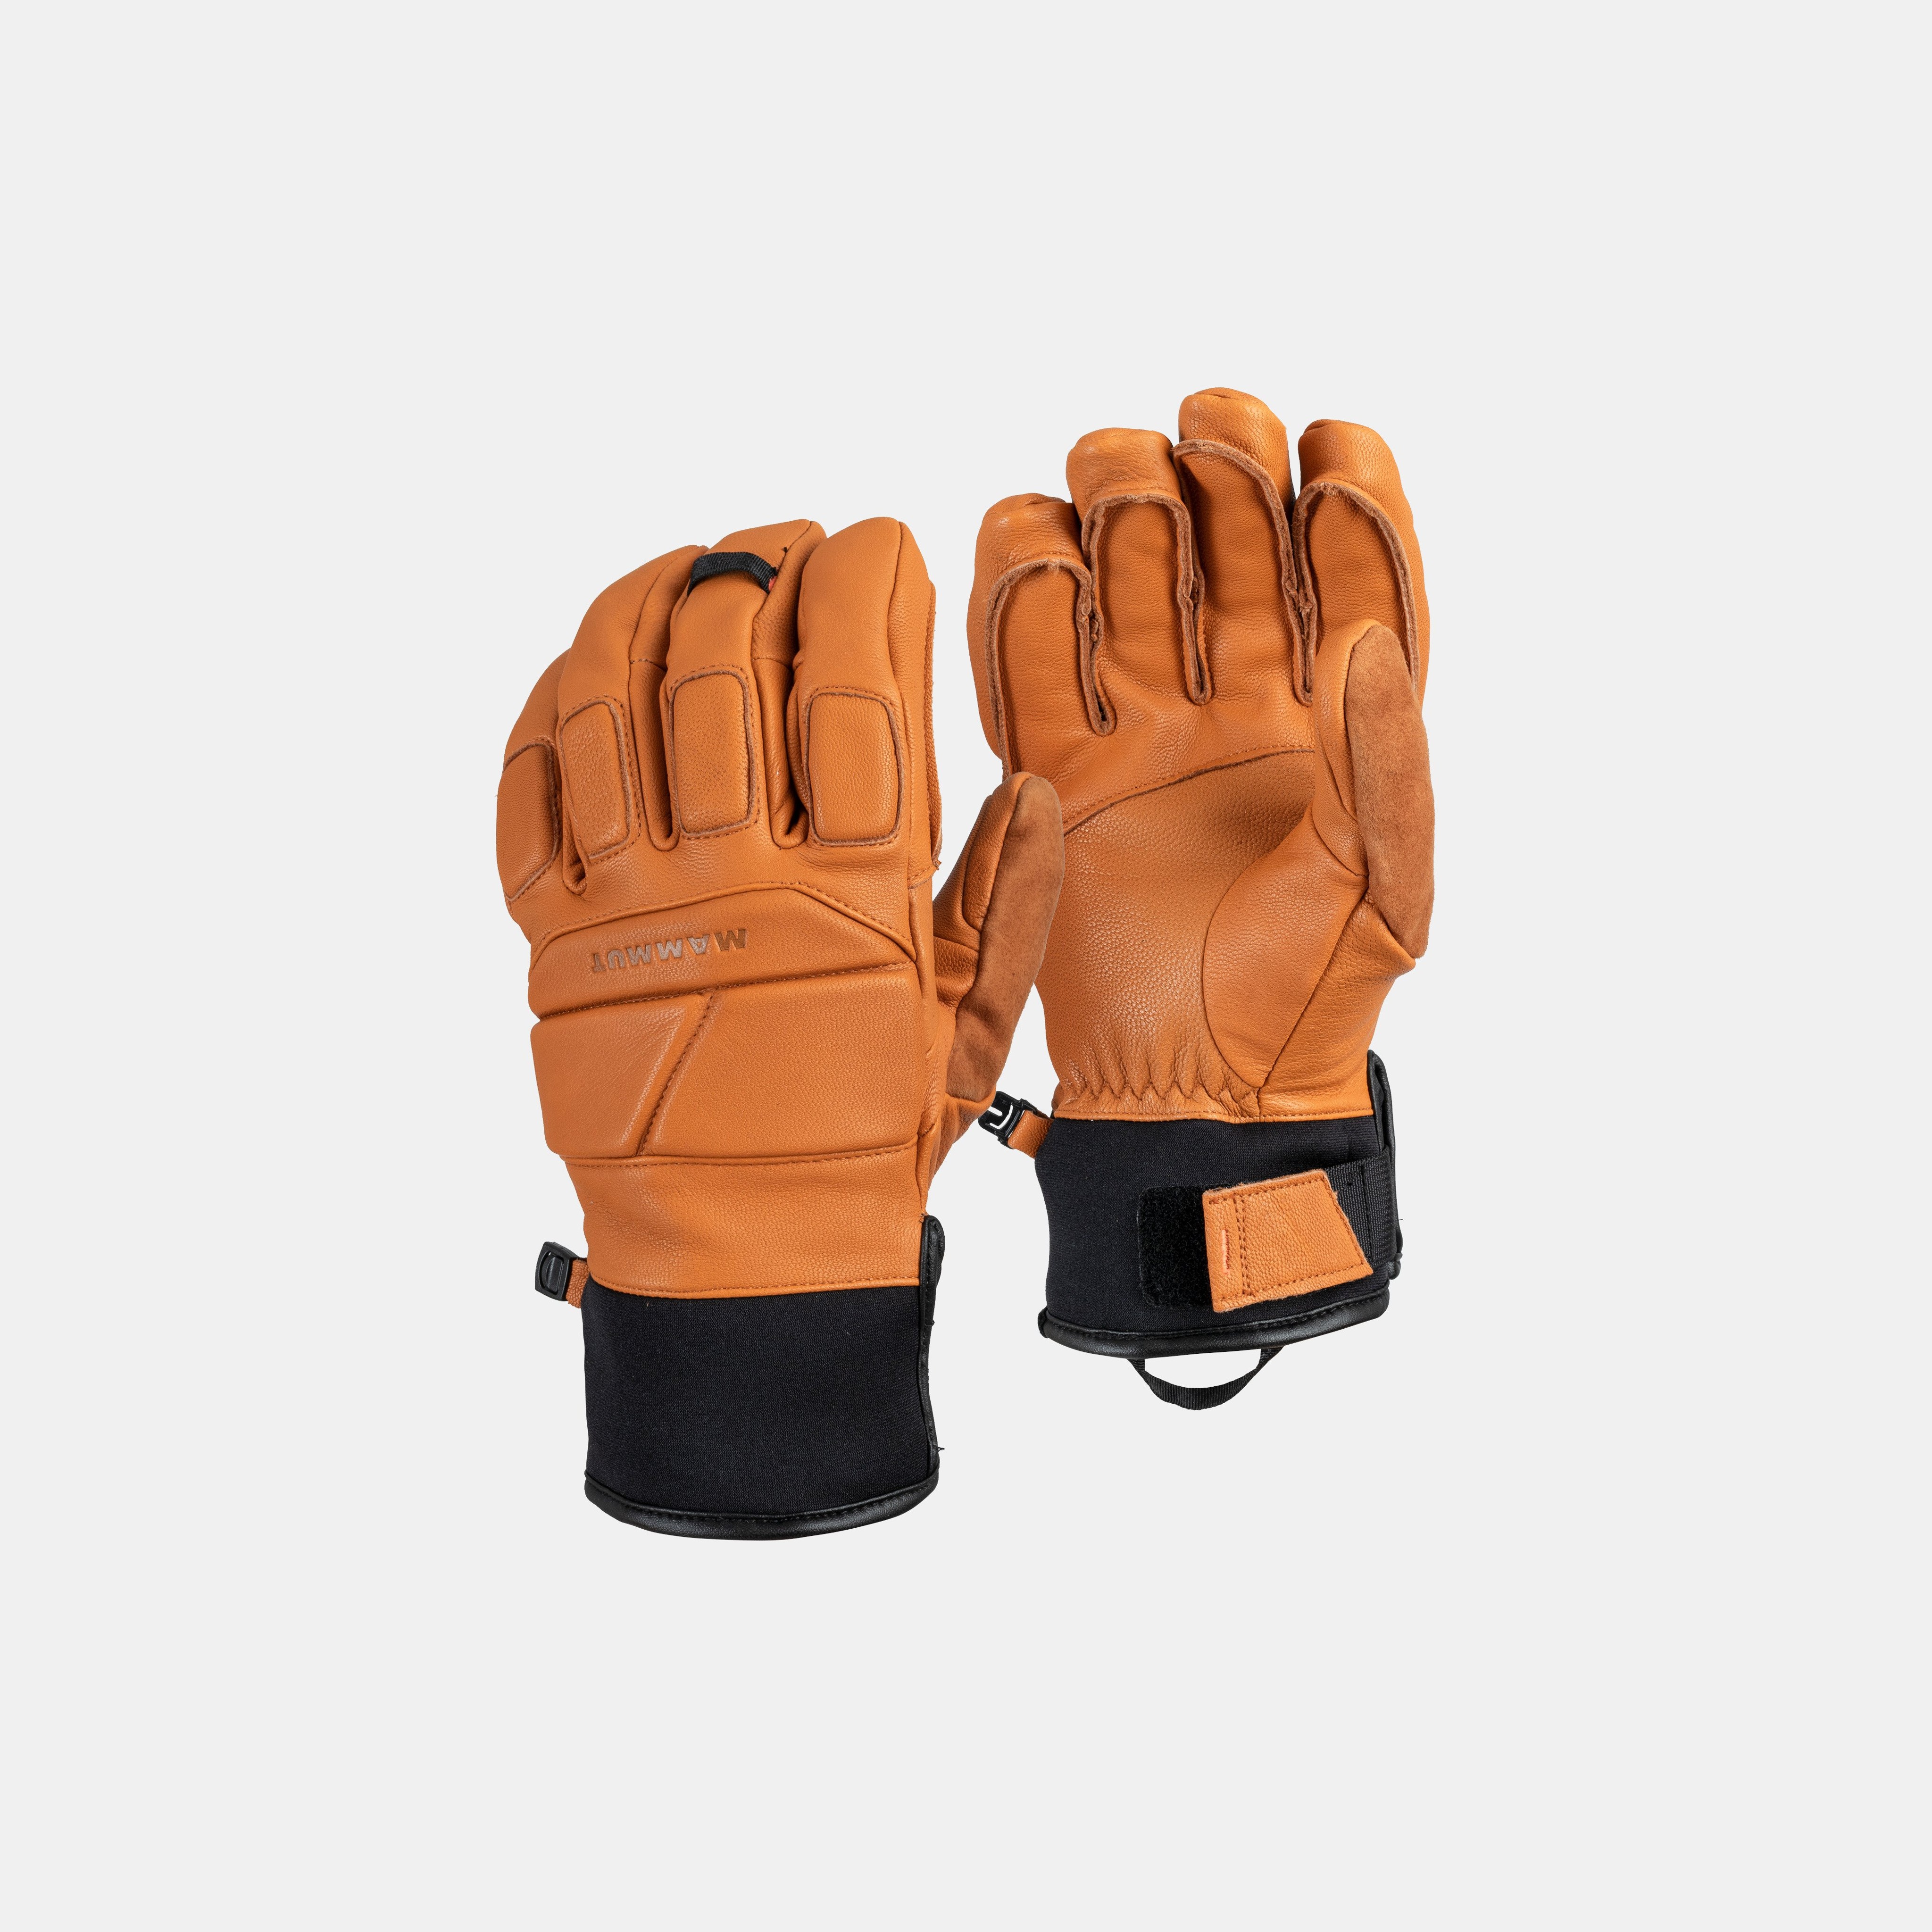 La Liste Glove product image